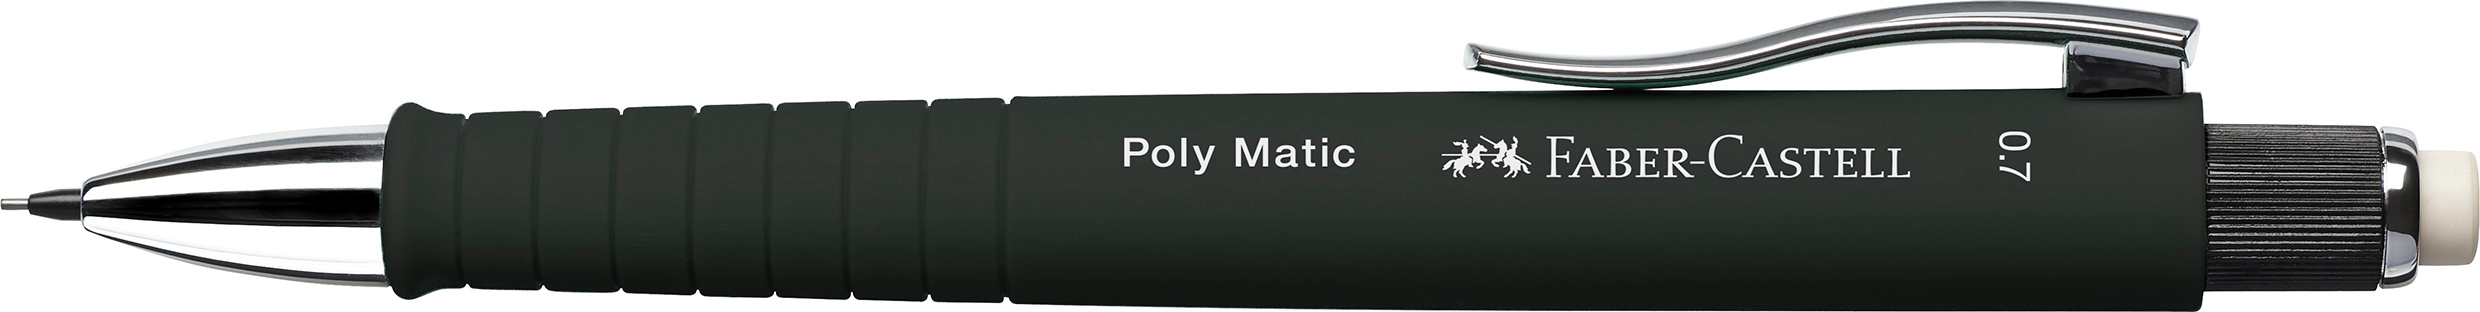 FABER-CASTELL Porte-mine Poly Matic 0.7mm 133353 noir